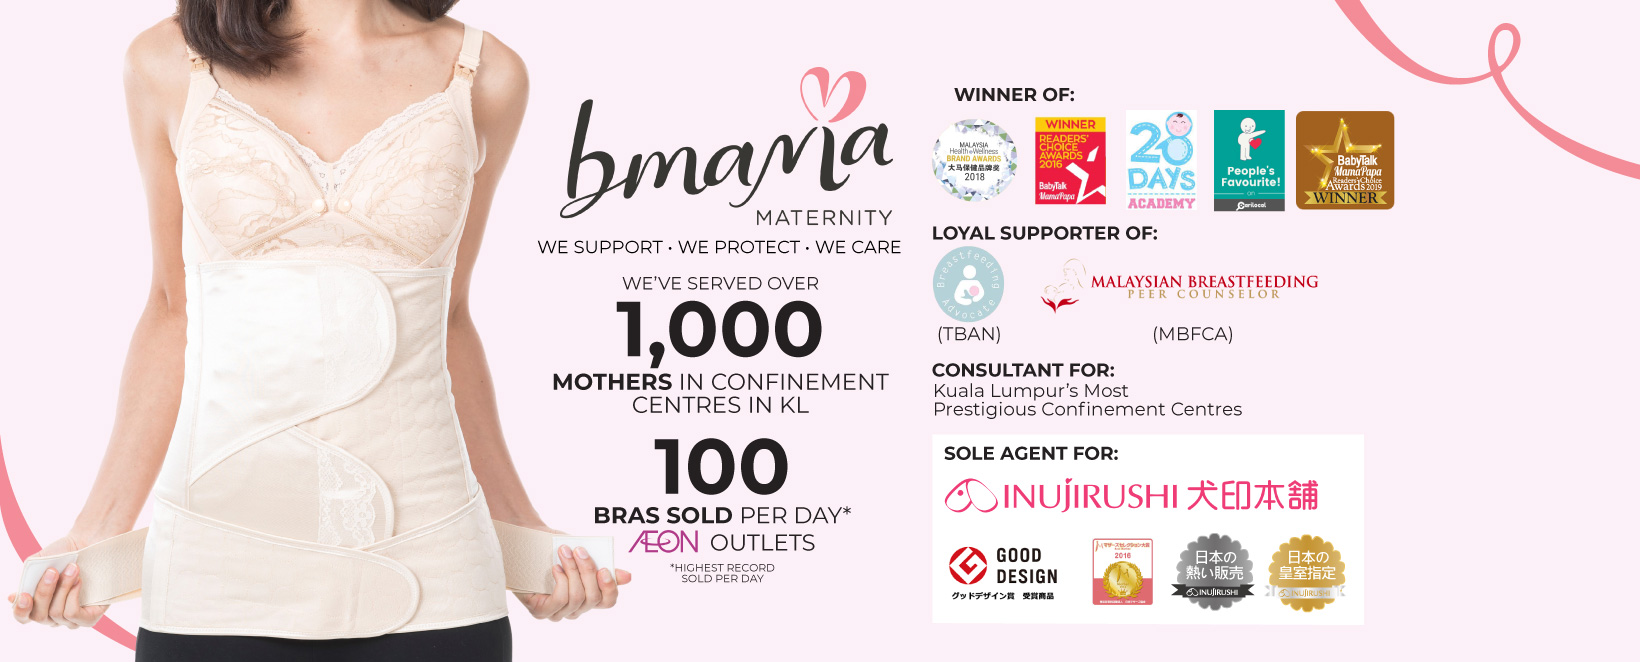 Bmama Maternity - Mulberry Silk Lace Wireless Nursing Bra (BR512)